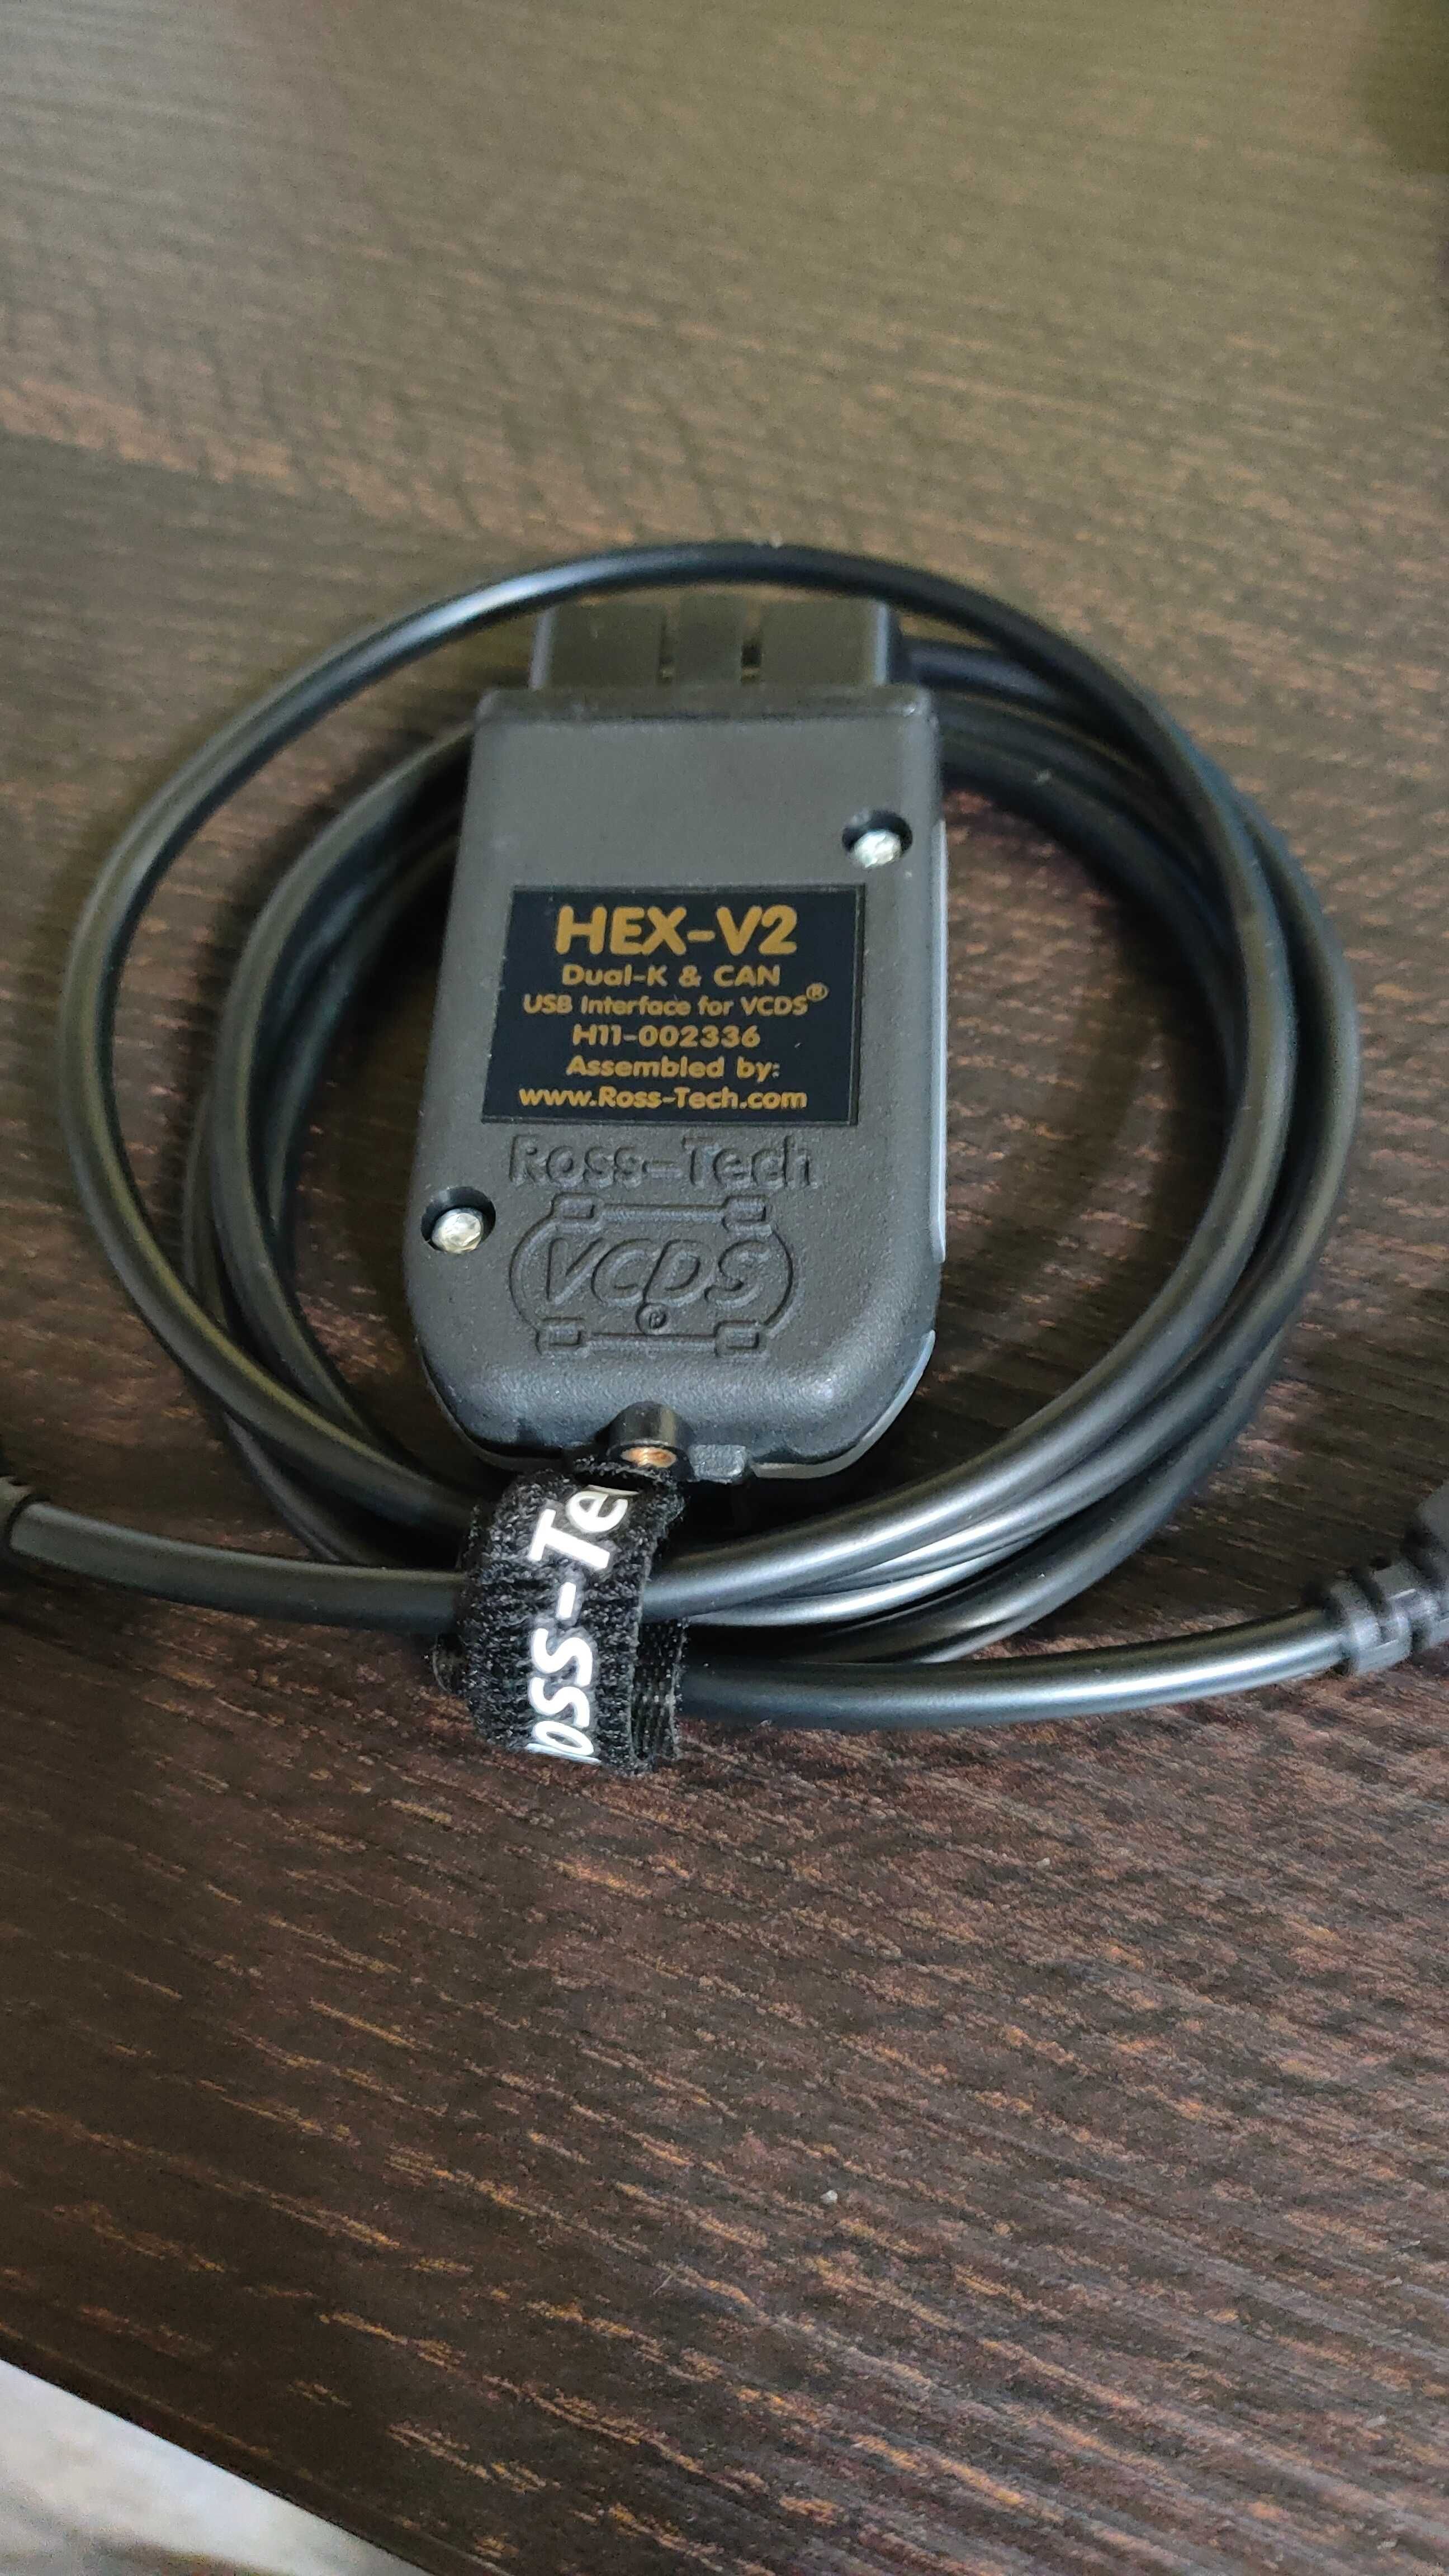 VCDS REAL HEX V2  ARM STM32F429 Soft 23.11 diagnoza tester auto VAG